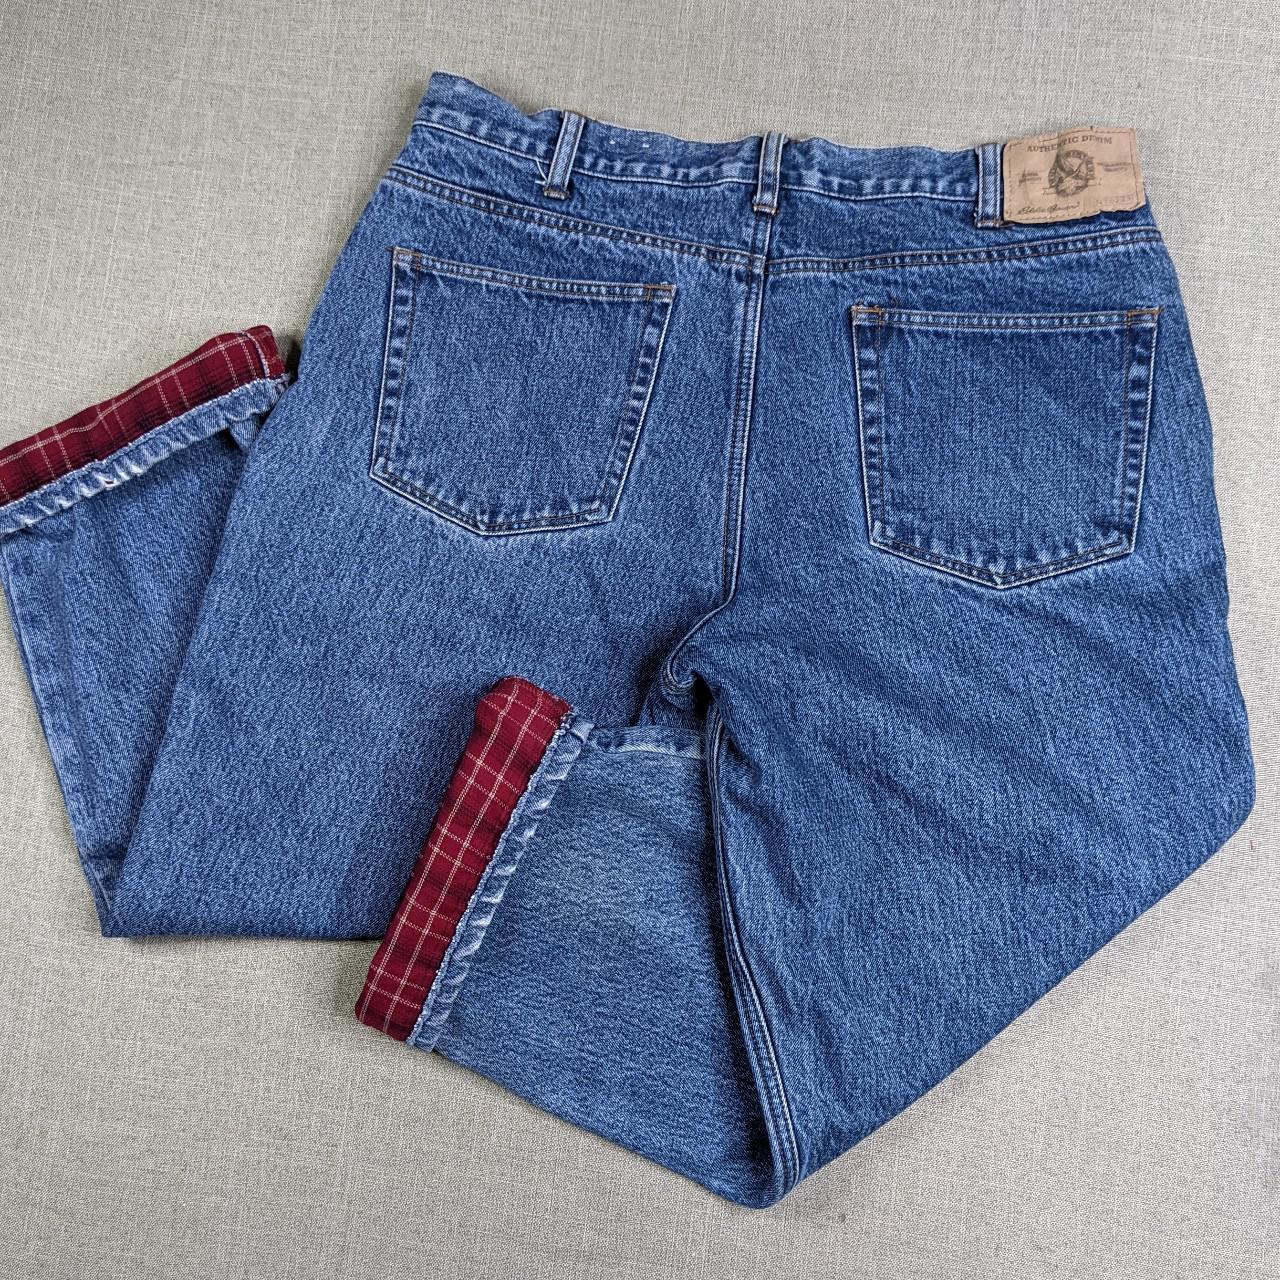 Product Image 1 - Vintage flannel jeans by Eddie